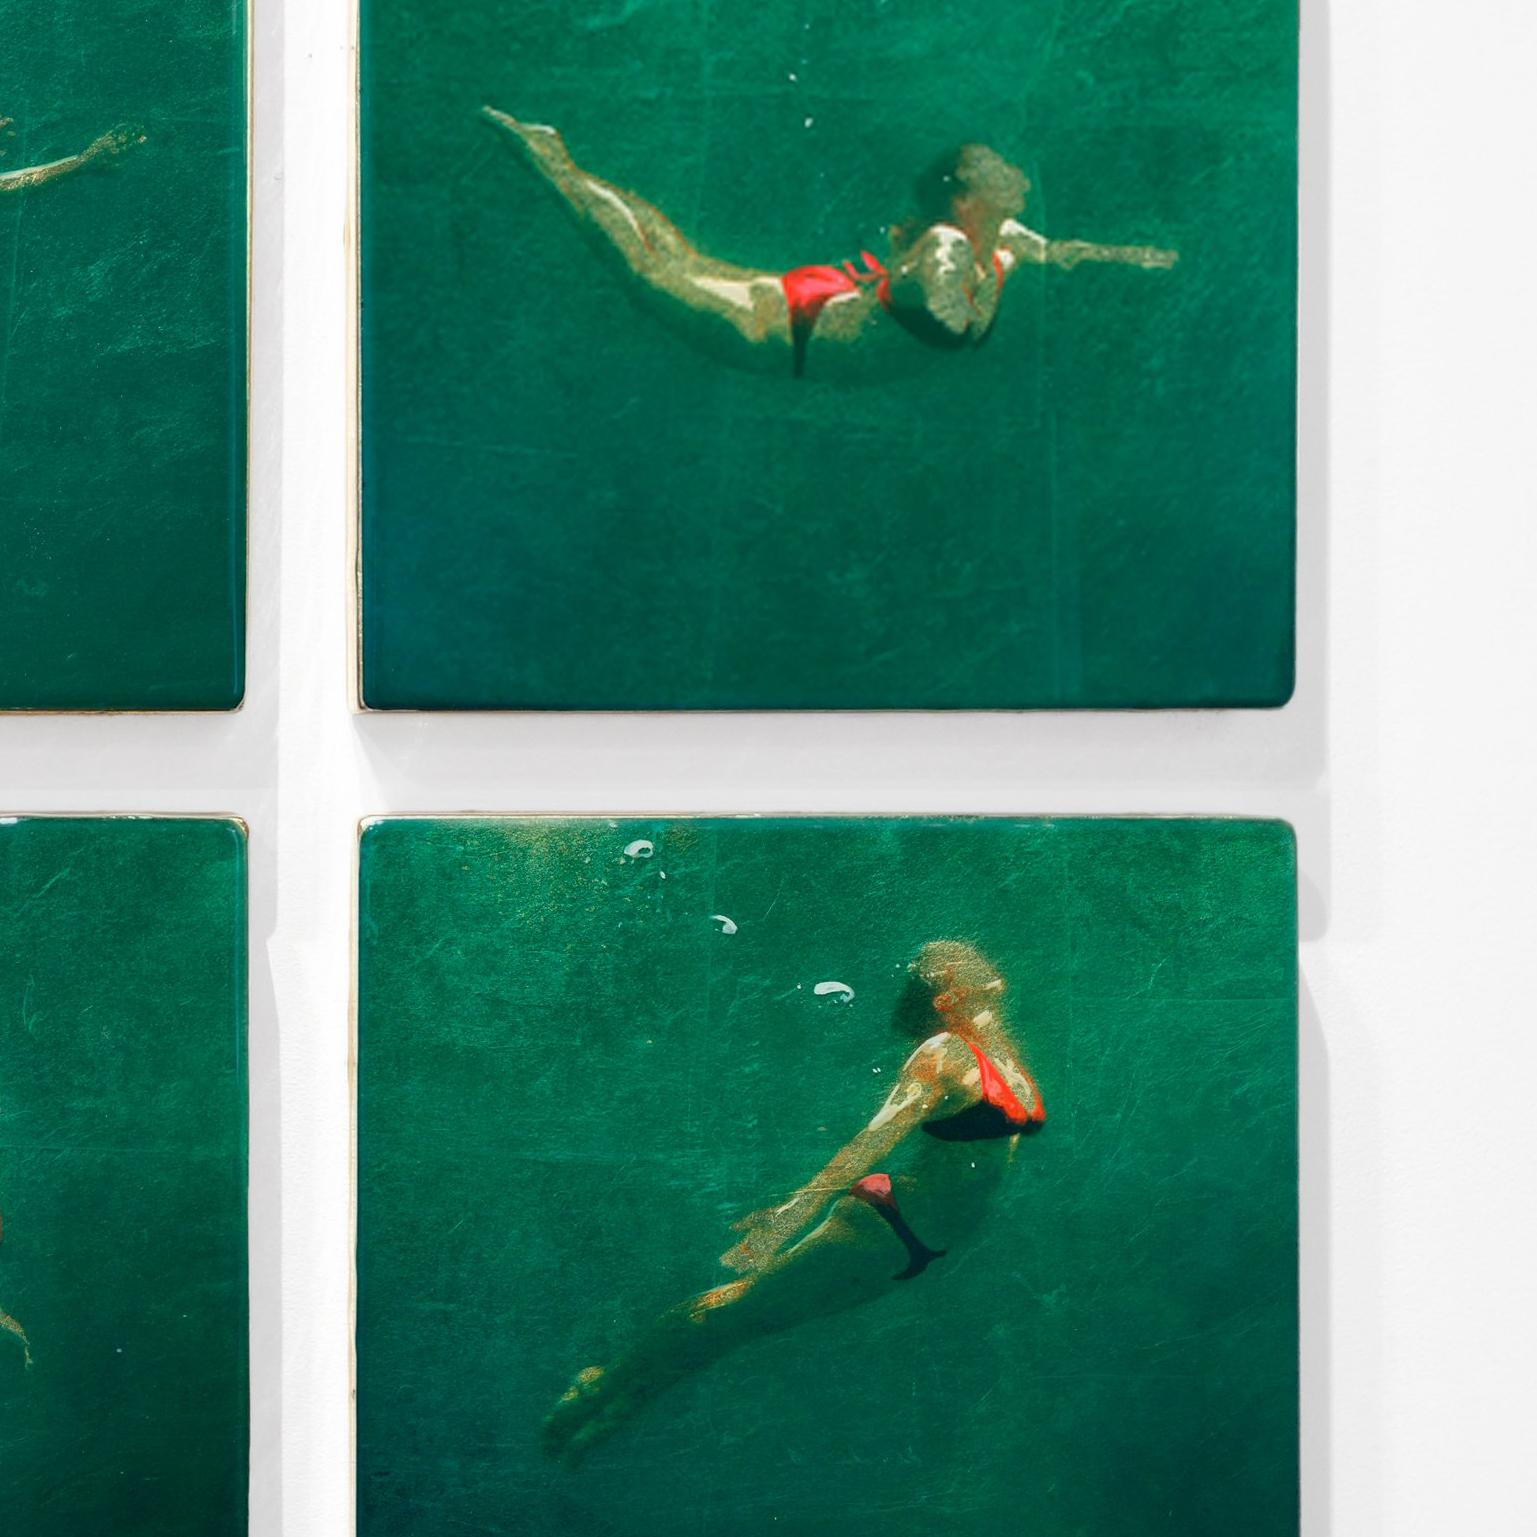 RISING UP (QUAD), photo-realism, women underwater, green water, red bikini - Contemporary Mixed Media Art by Eric Zener